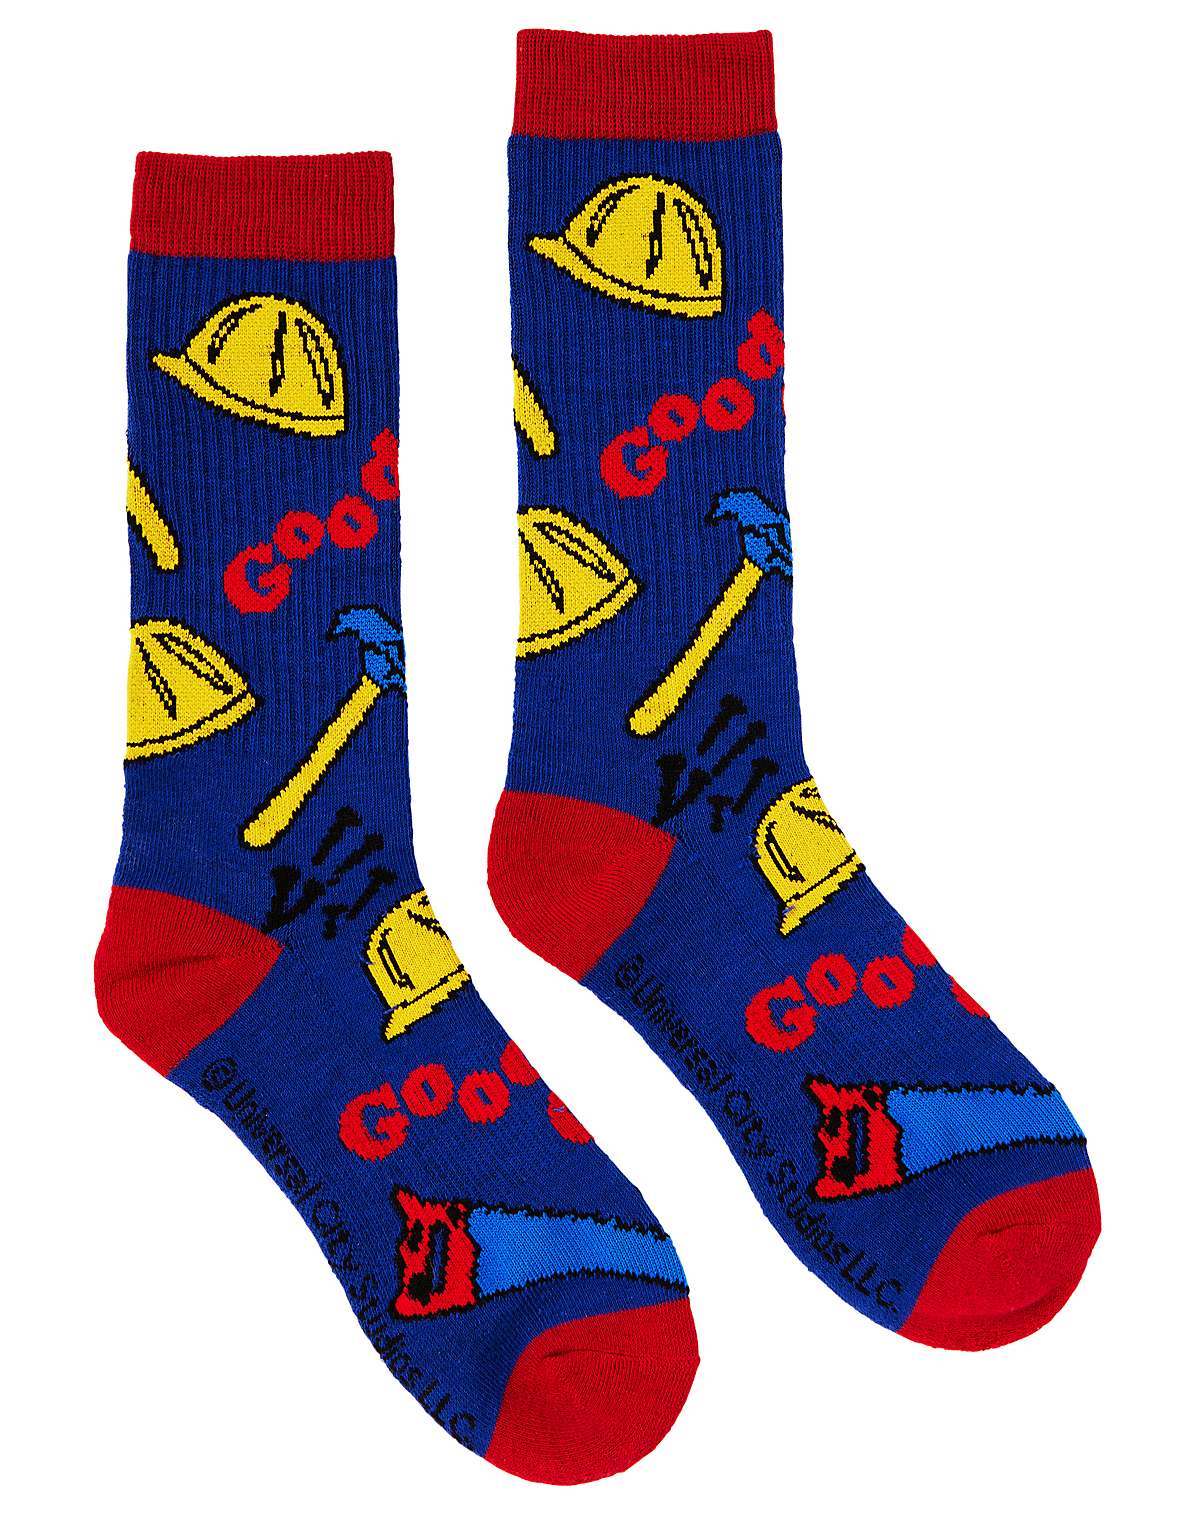 360 Chucky Crew Socks